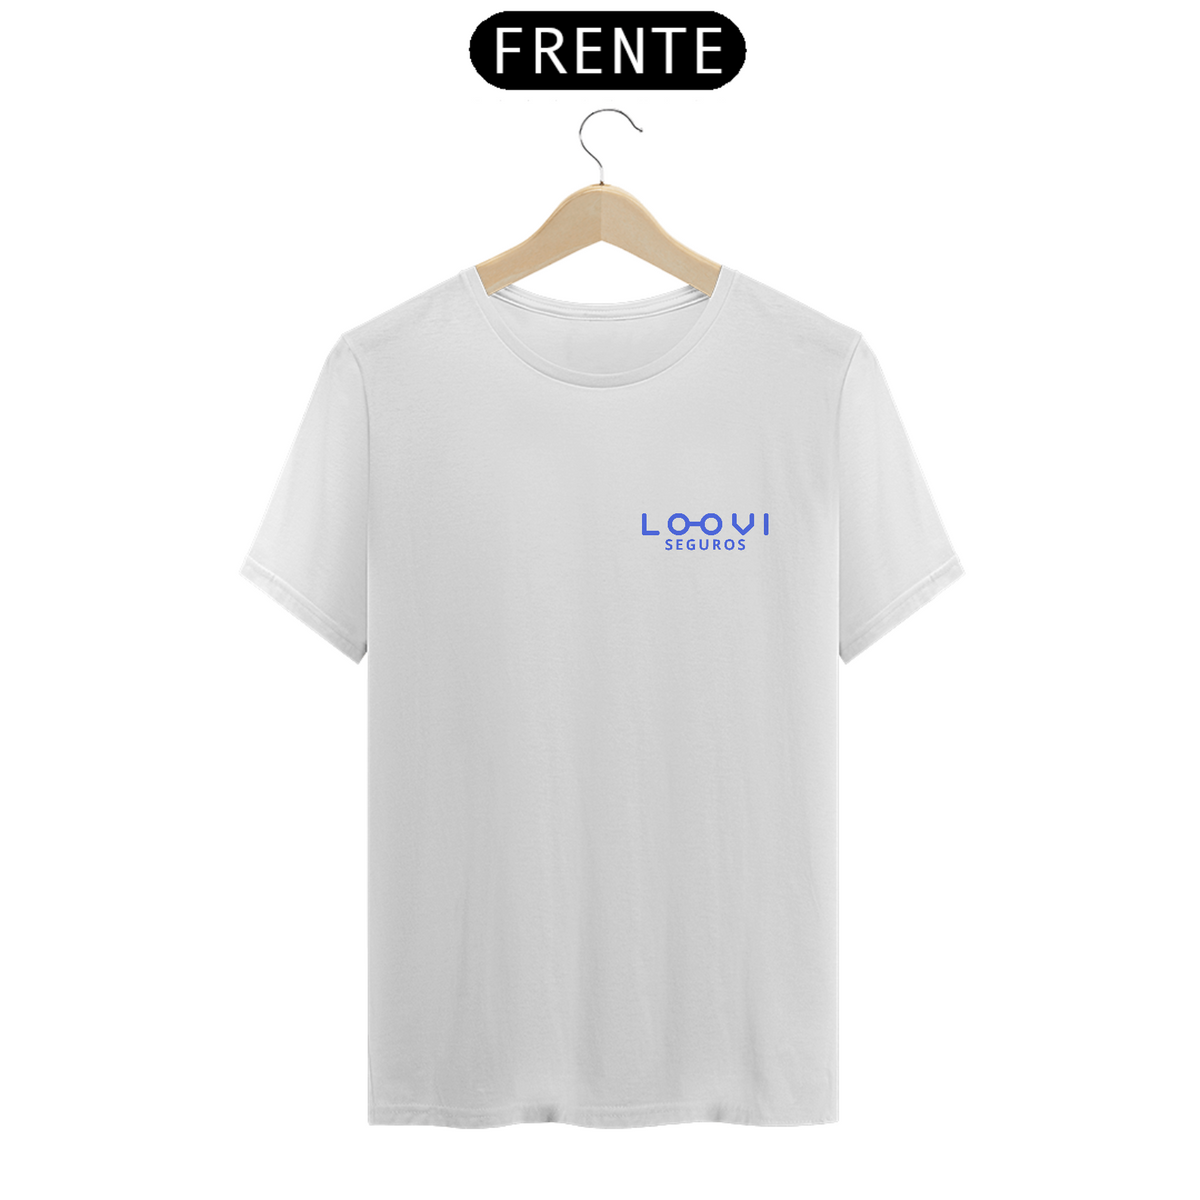 Nome do produto: Camiseta Loovi - Branca SMP